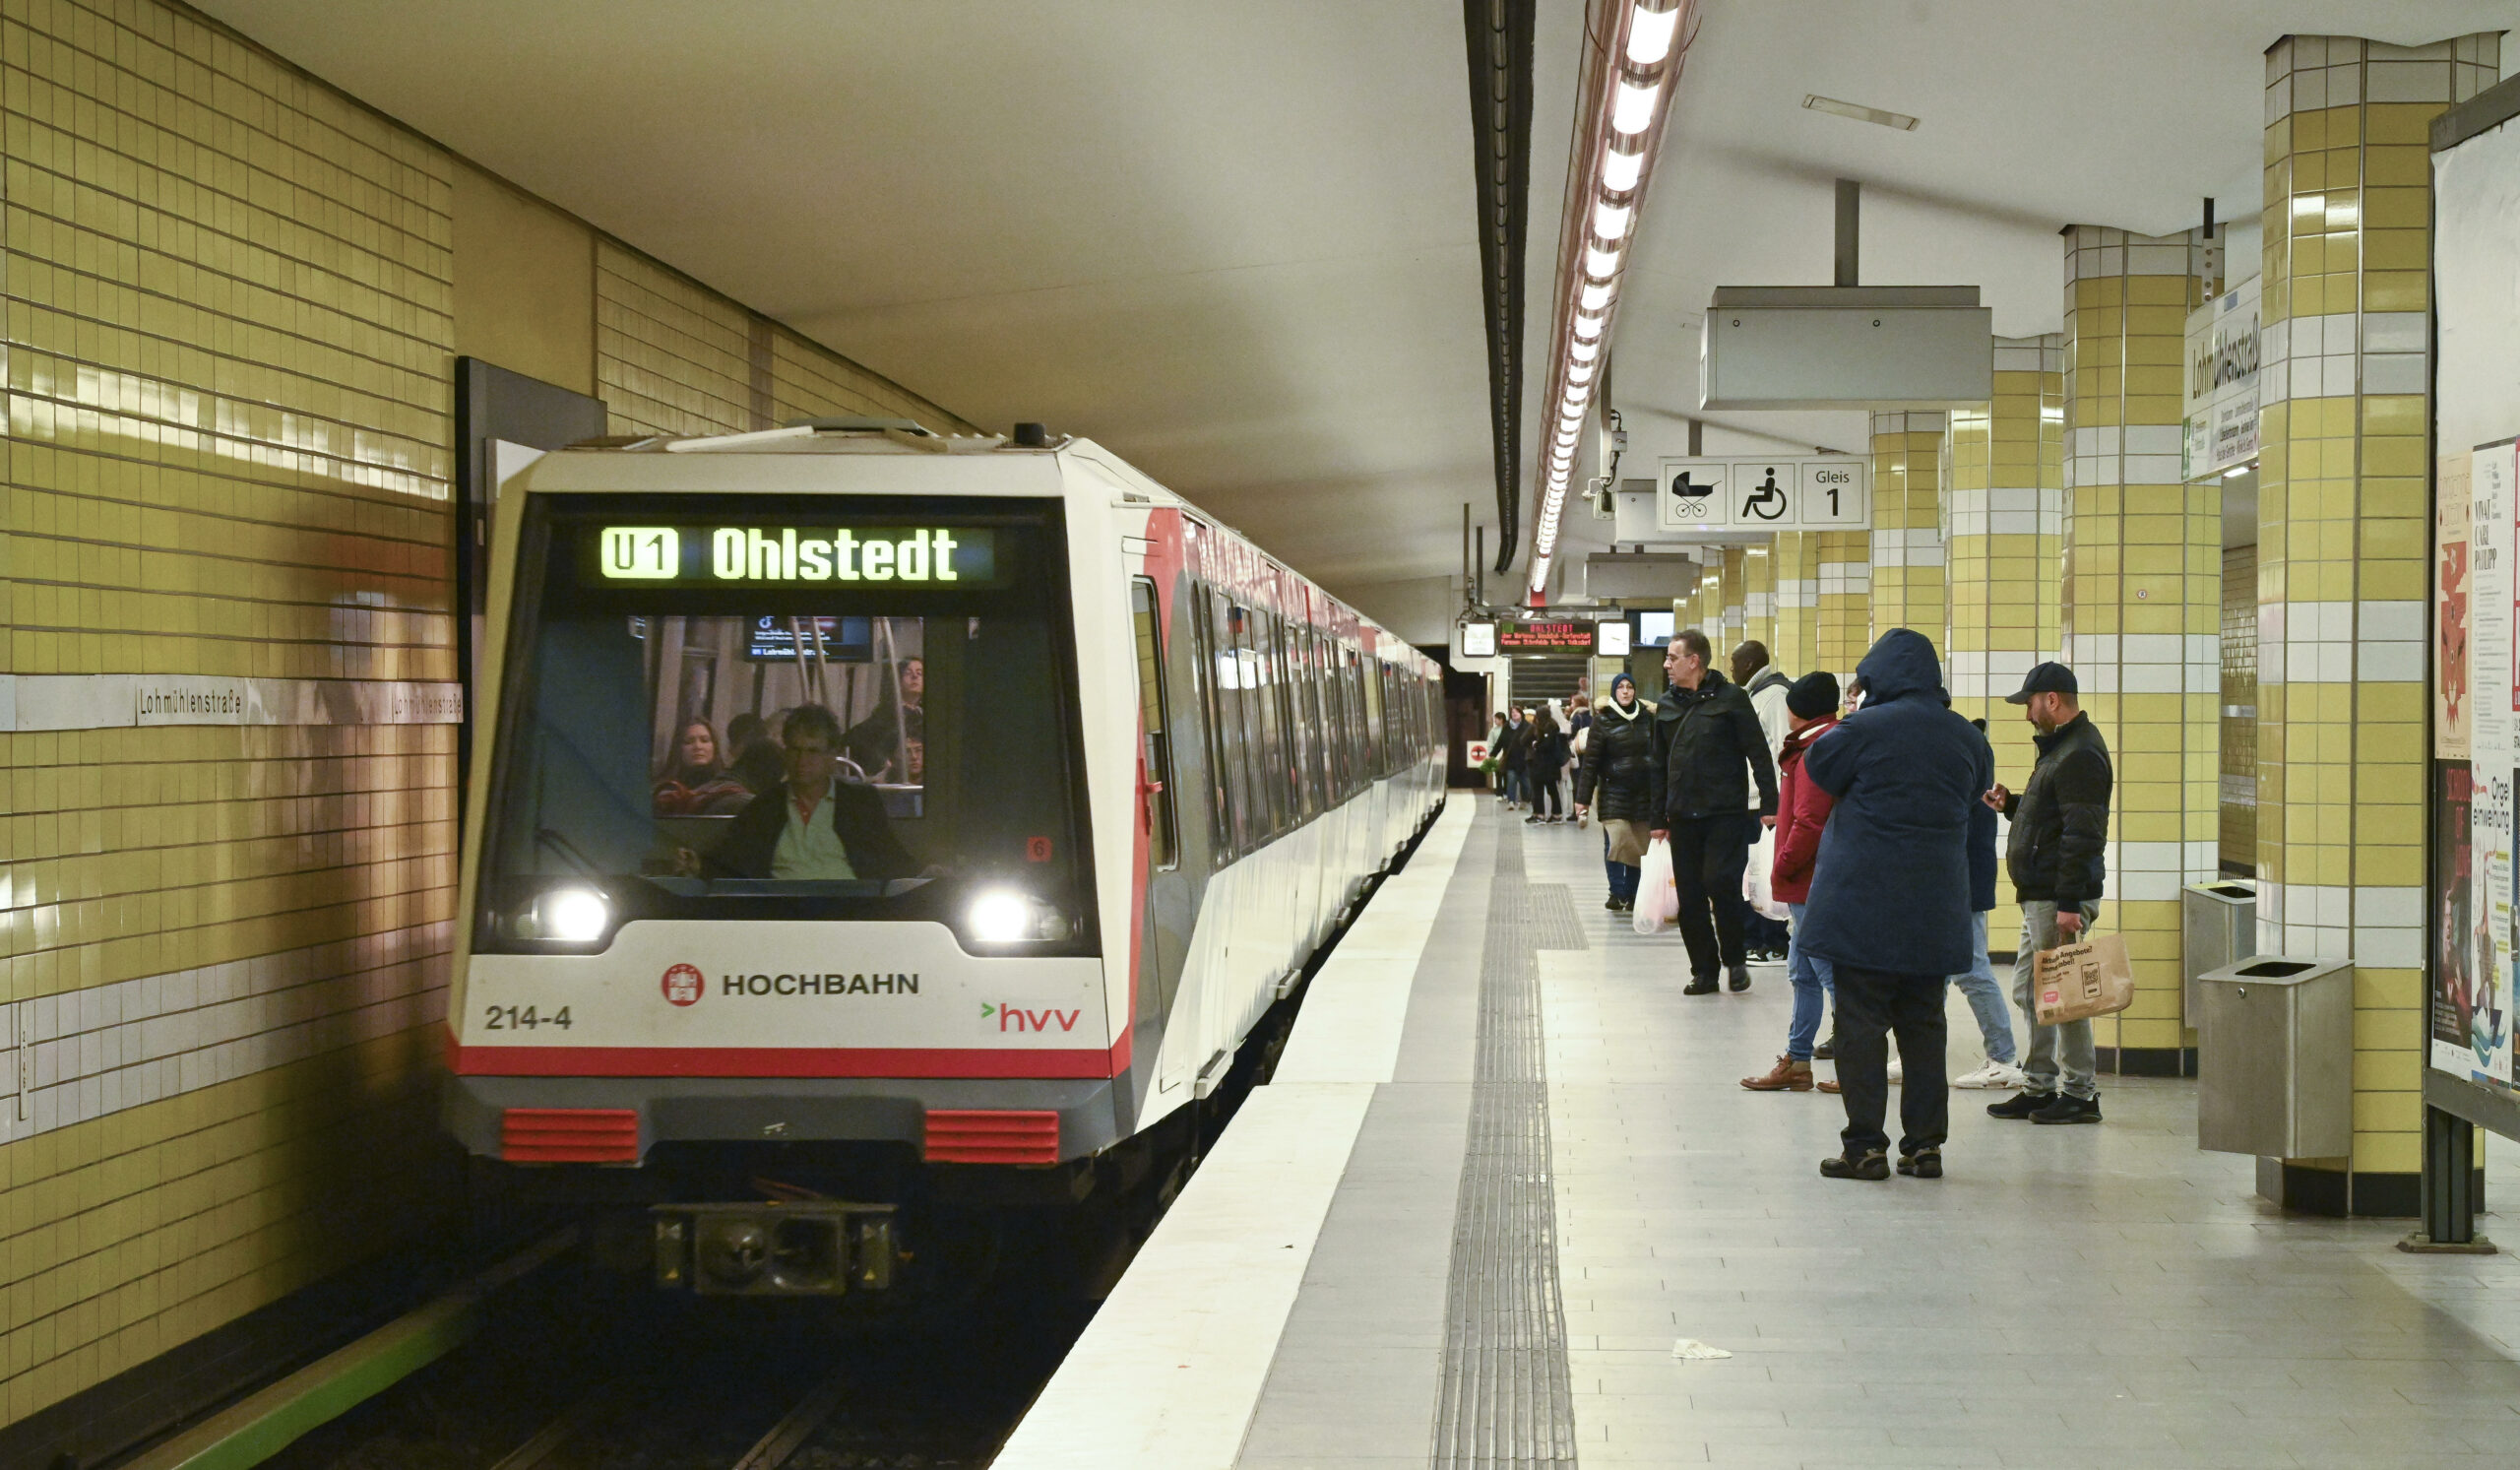 U-Bahnstation Lohmühlenstraße